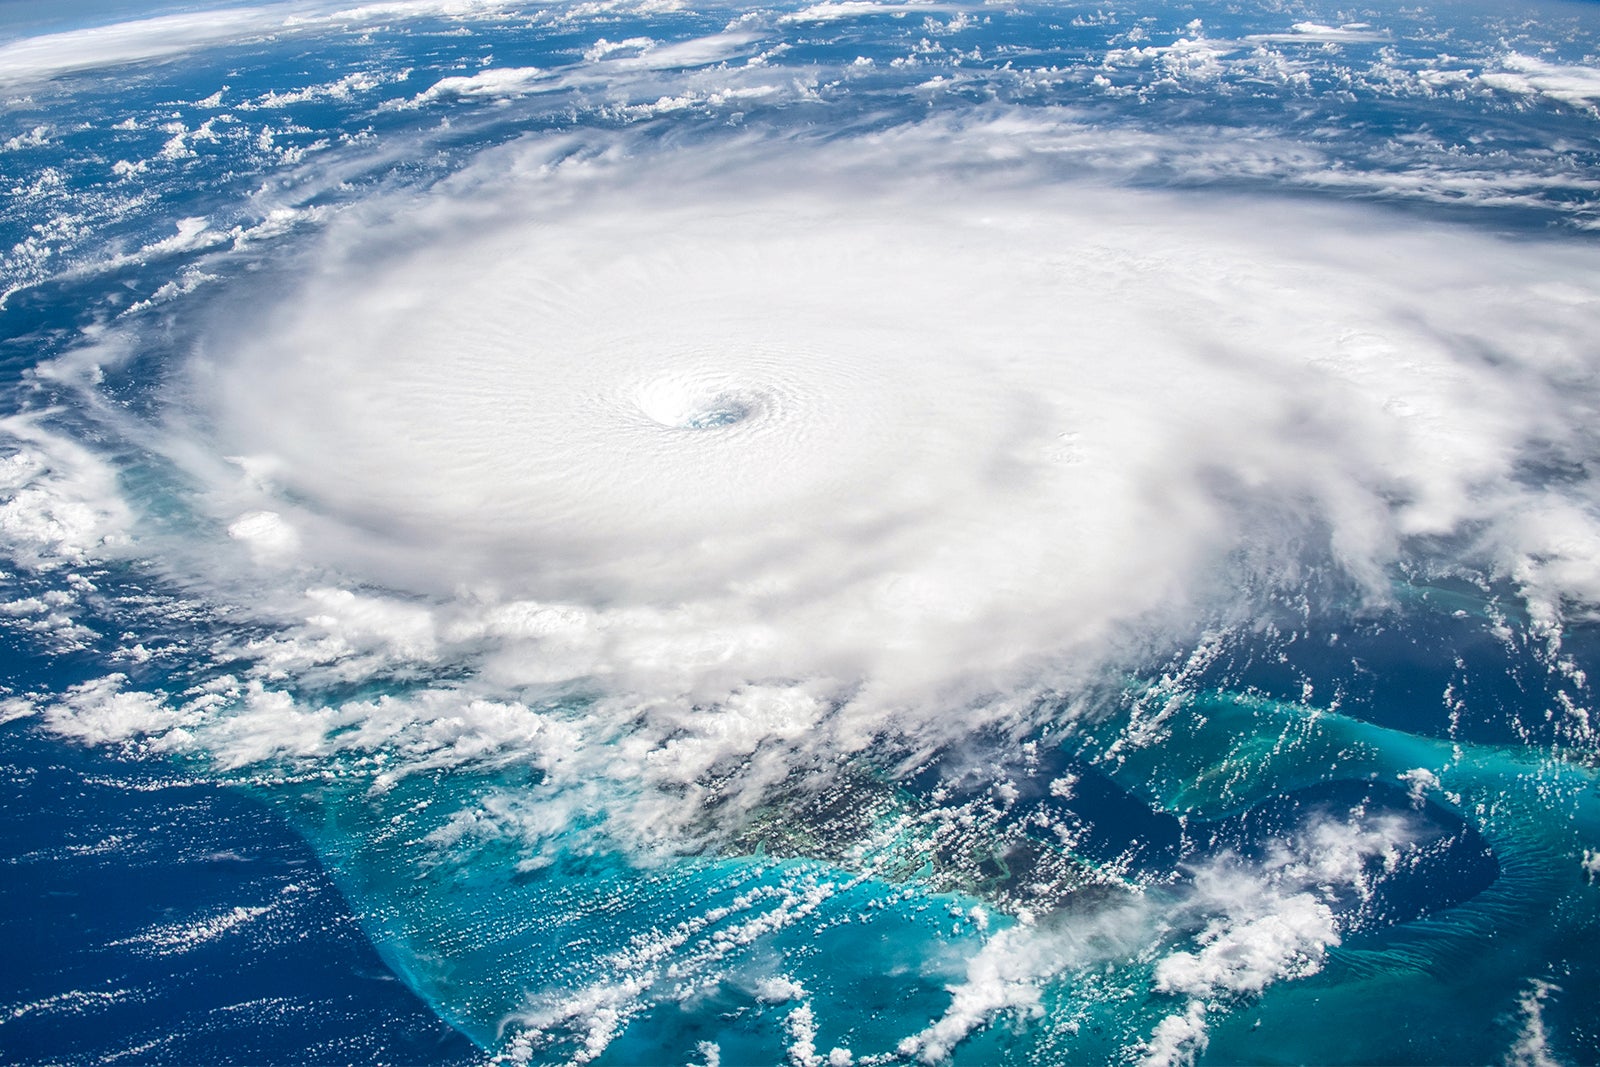 Satellite image of Hurricane Dorian